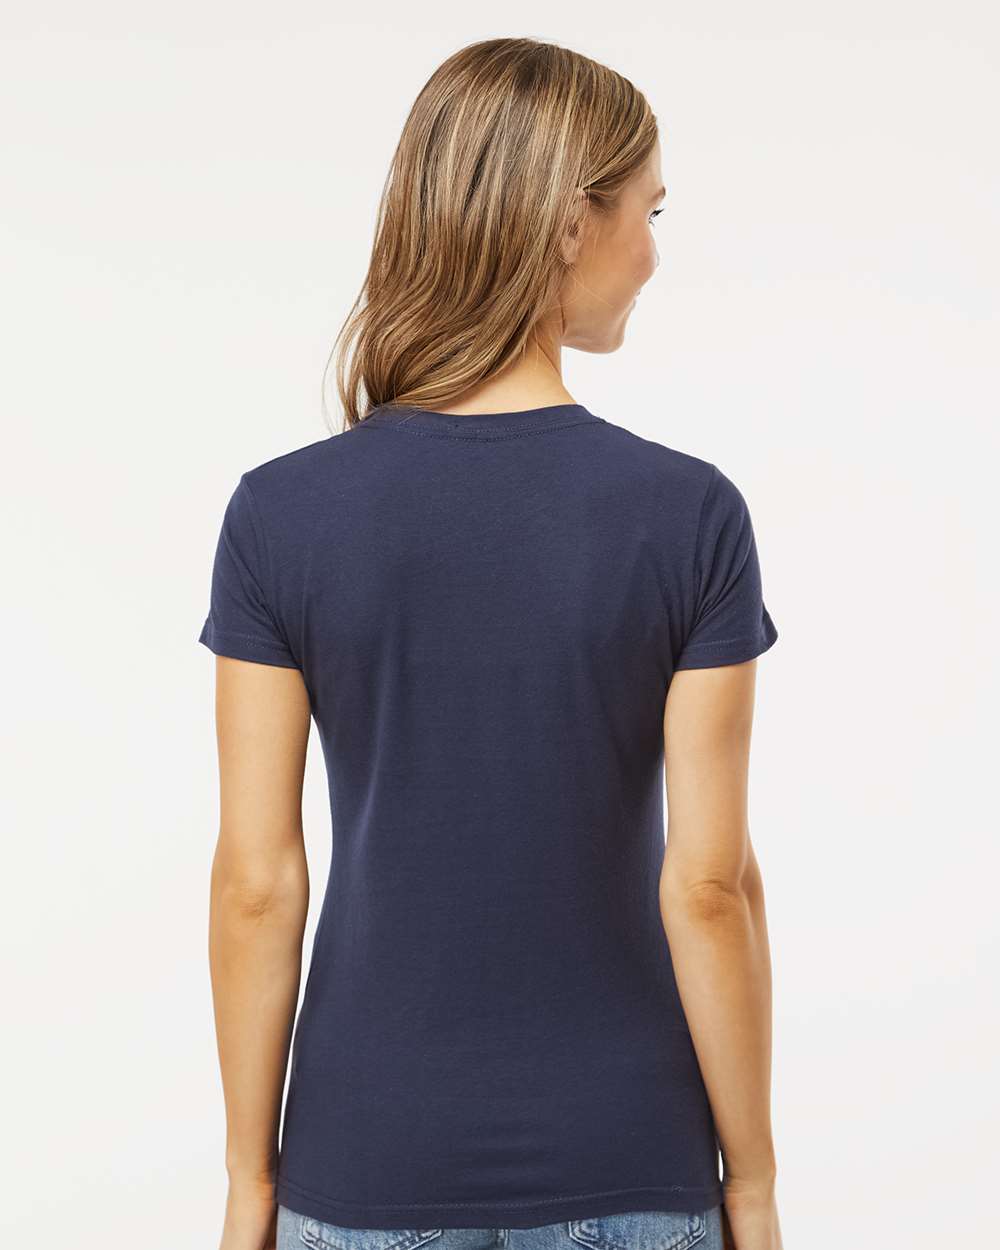 M&O Women's Fine Jersey T-Shirt 4513 #colormdl_Fine Navy